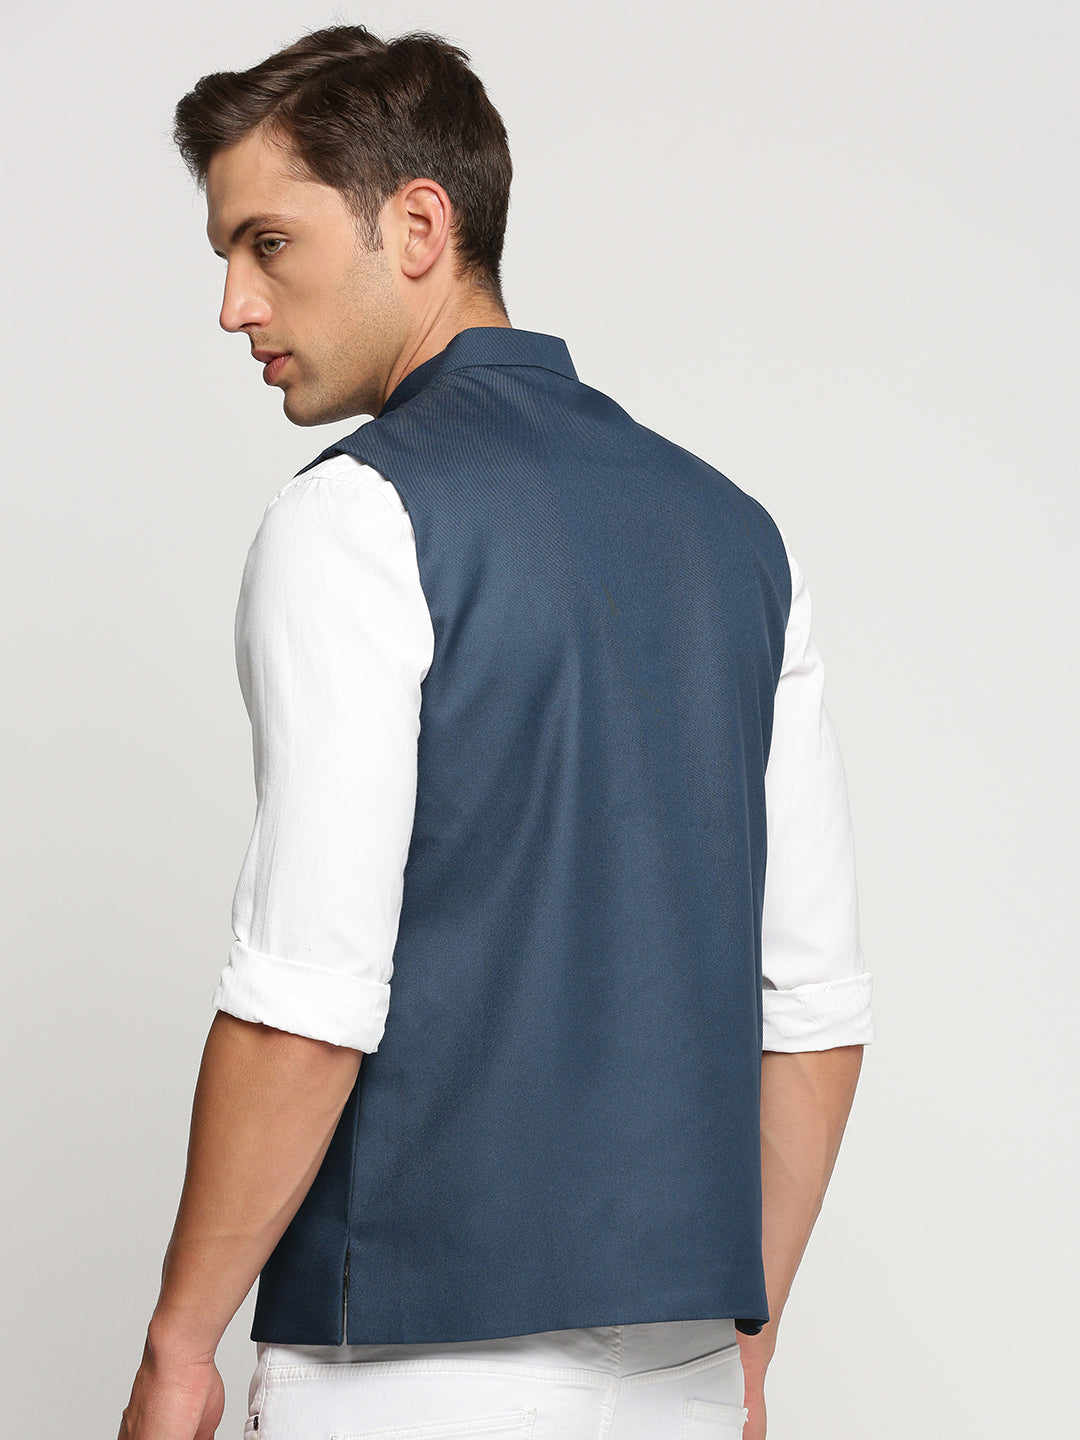 Men's Teal Mandarin Collar Solid Nehru Jacket